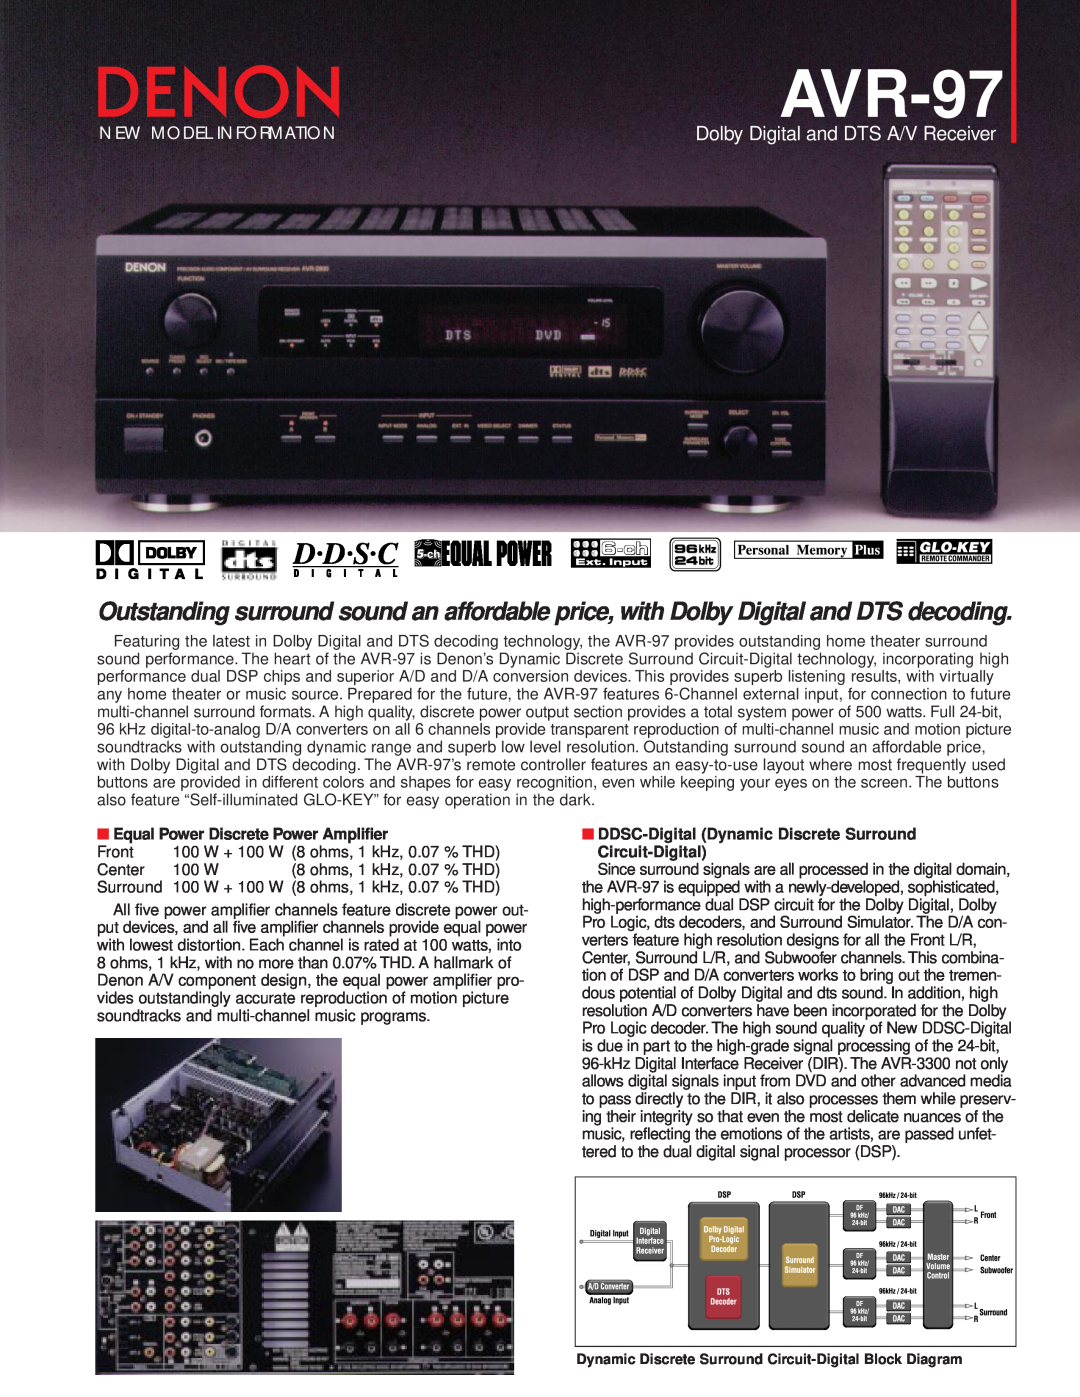 Denon AVR-97 manual Dolby Digital and DTS A/V Receiver, New Model Information 